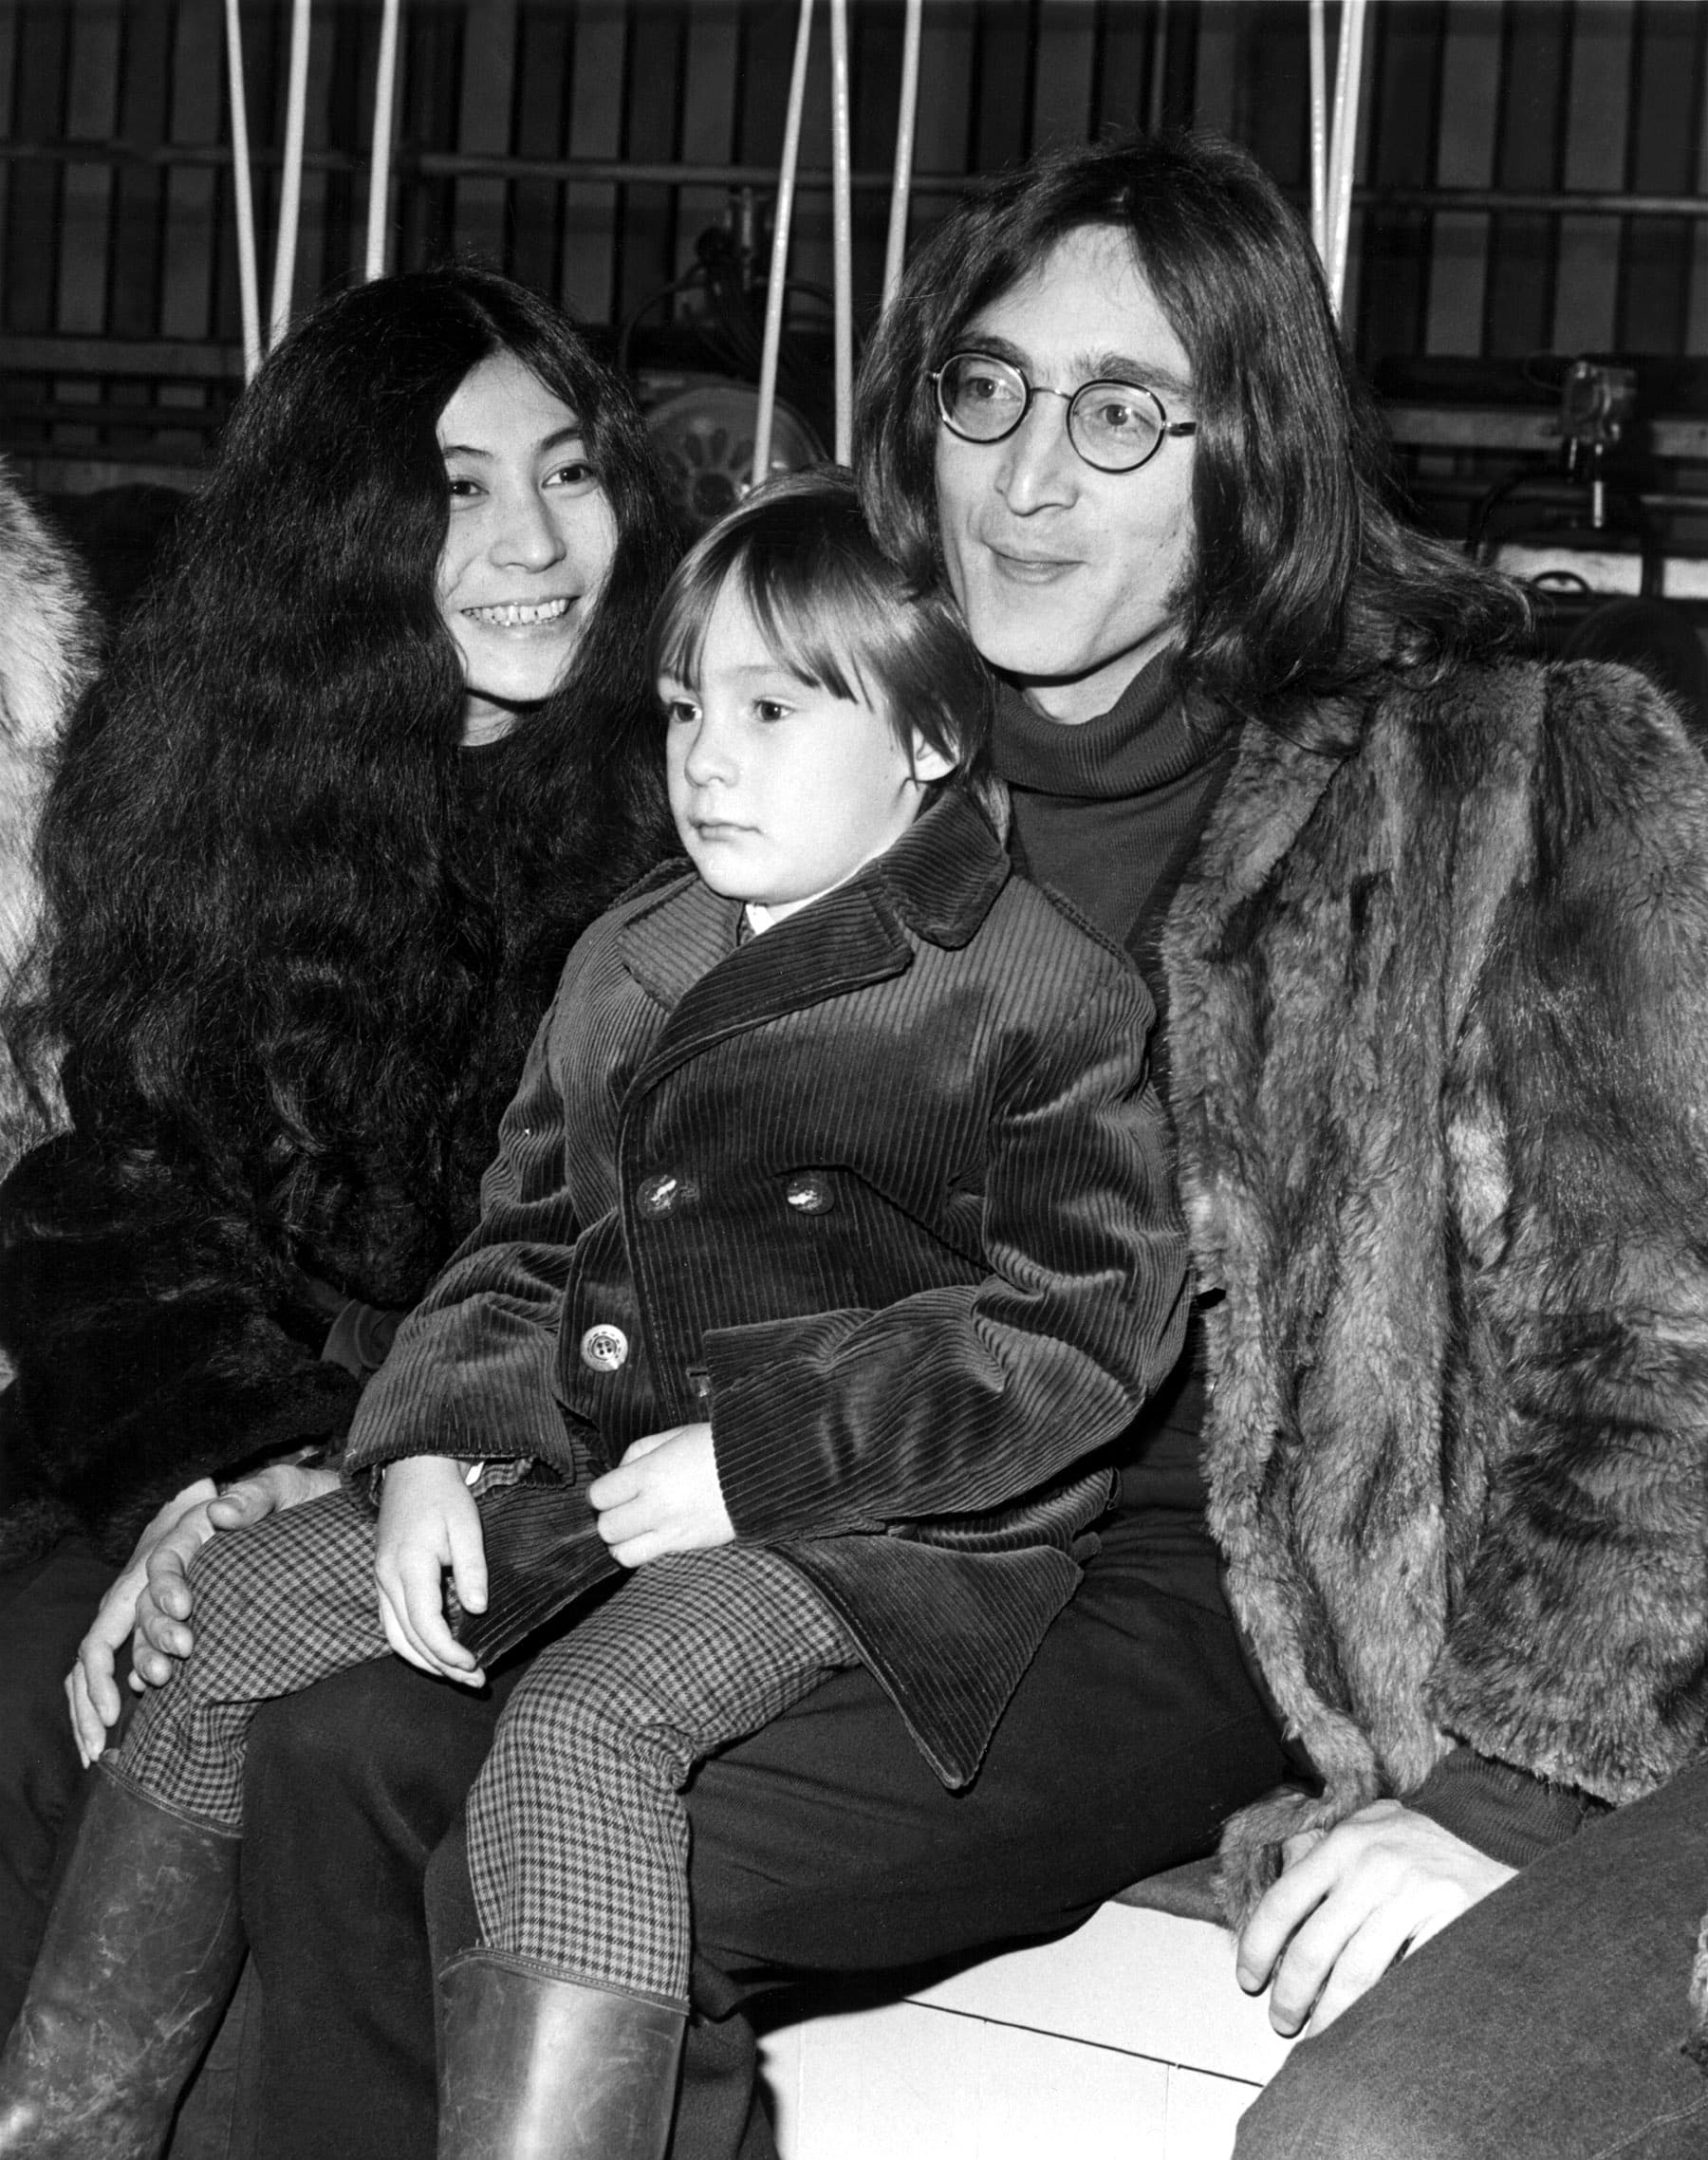 Yoko Ono, Julian Lennon, John Lennon watching the rehearsal for ROLLING STONES' ROCK 'N' ROLL CIRCUS in England, 12/11/68